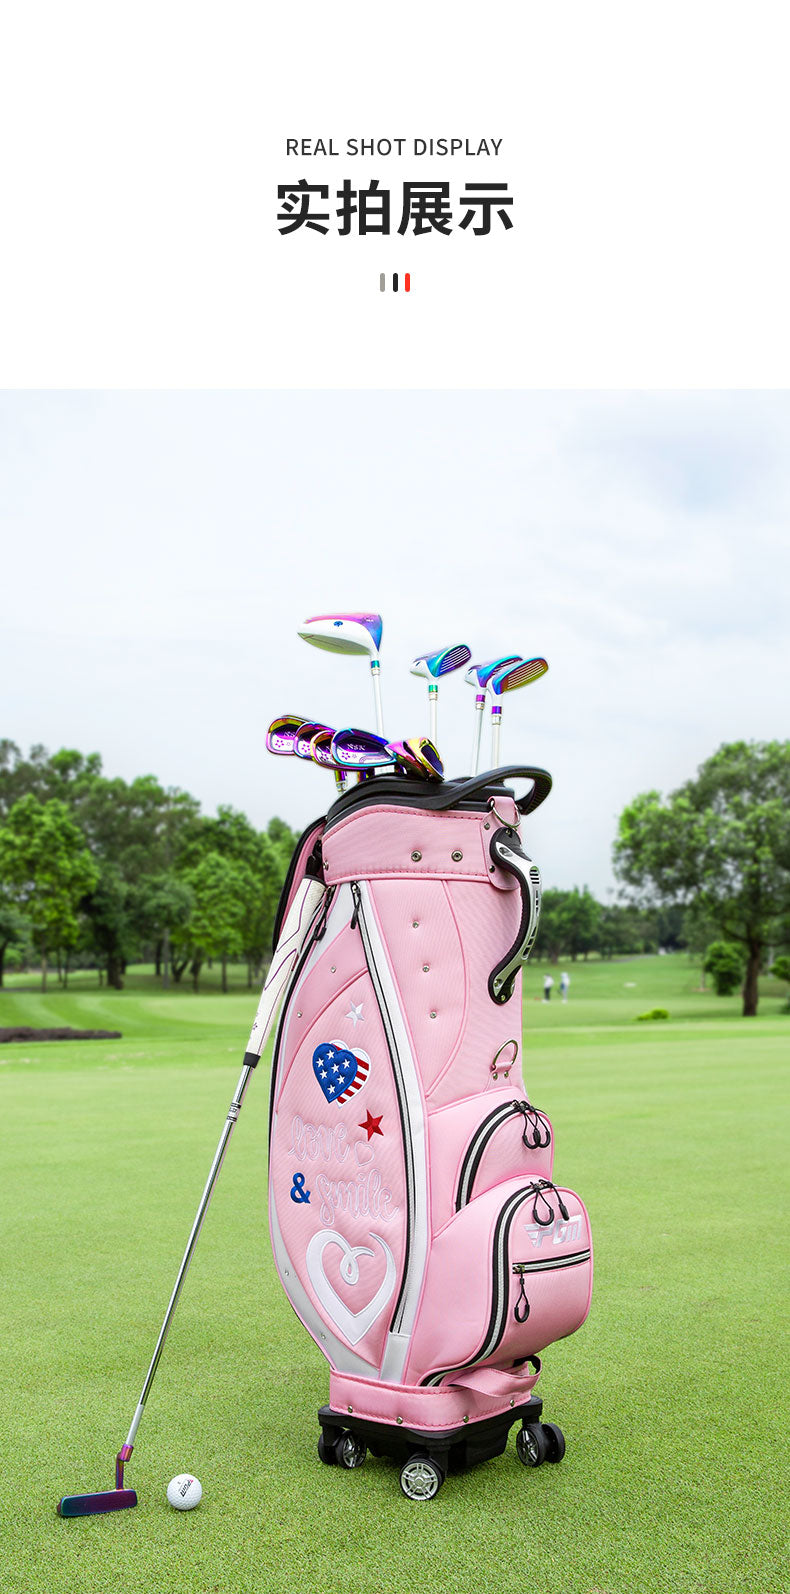 PGM QB135 cute golf bag female golf travel bag pink golf bags with